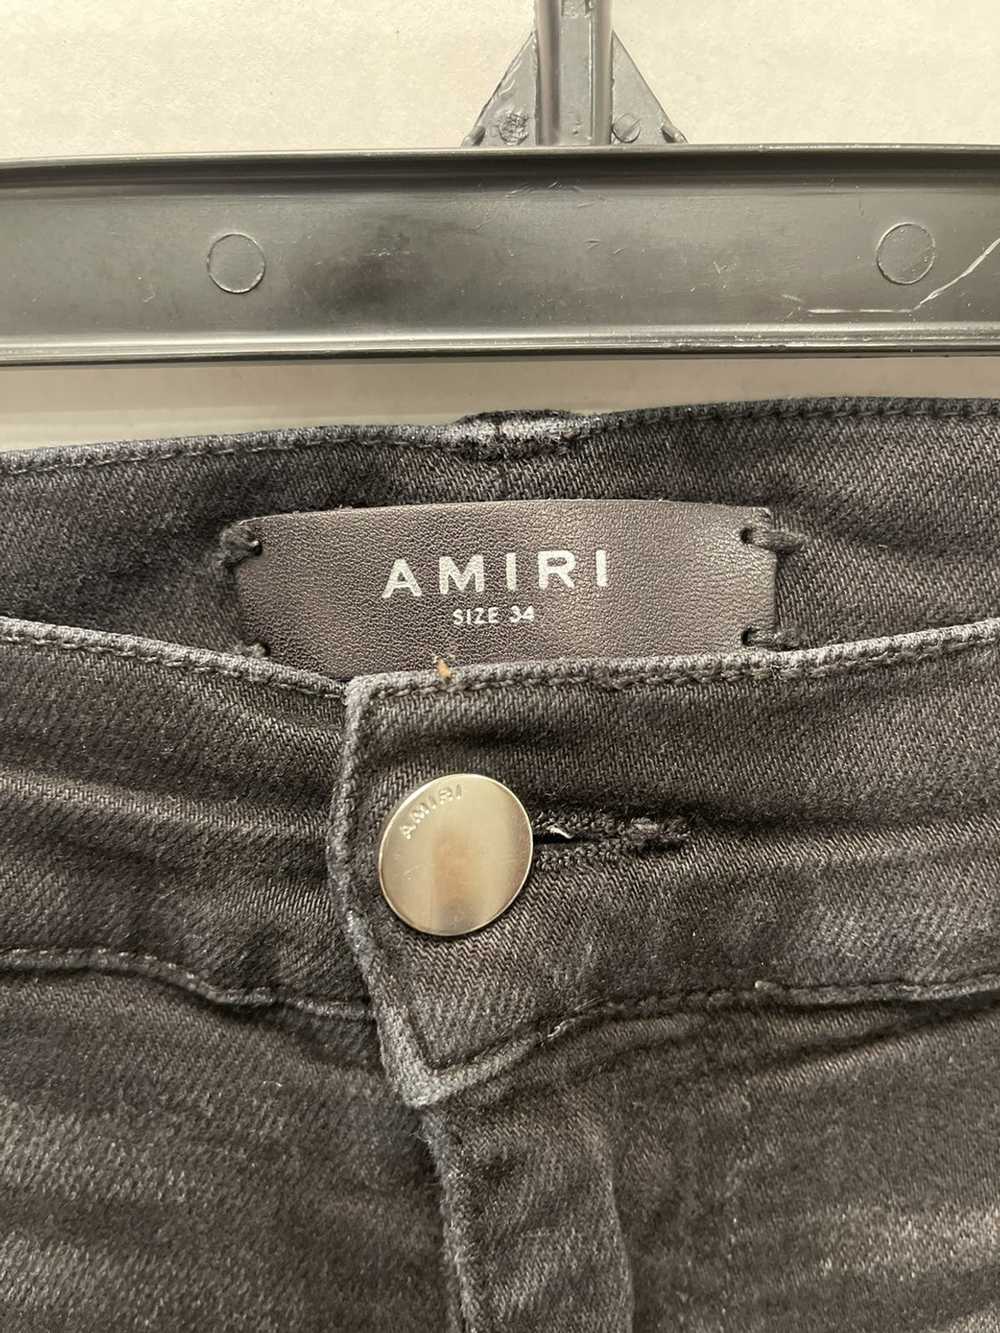 Amiri Mike Amiri Distressed Denim Jeans Size 34 - image 3